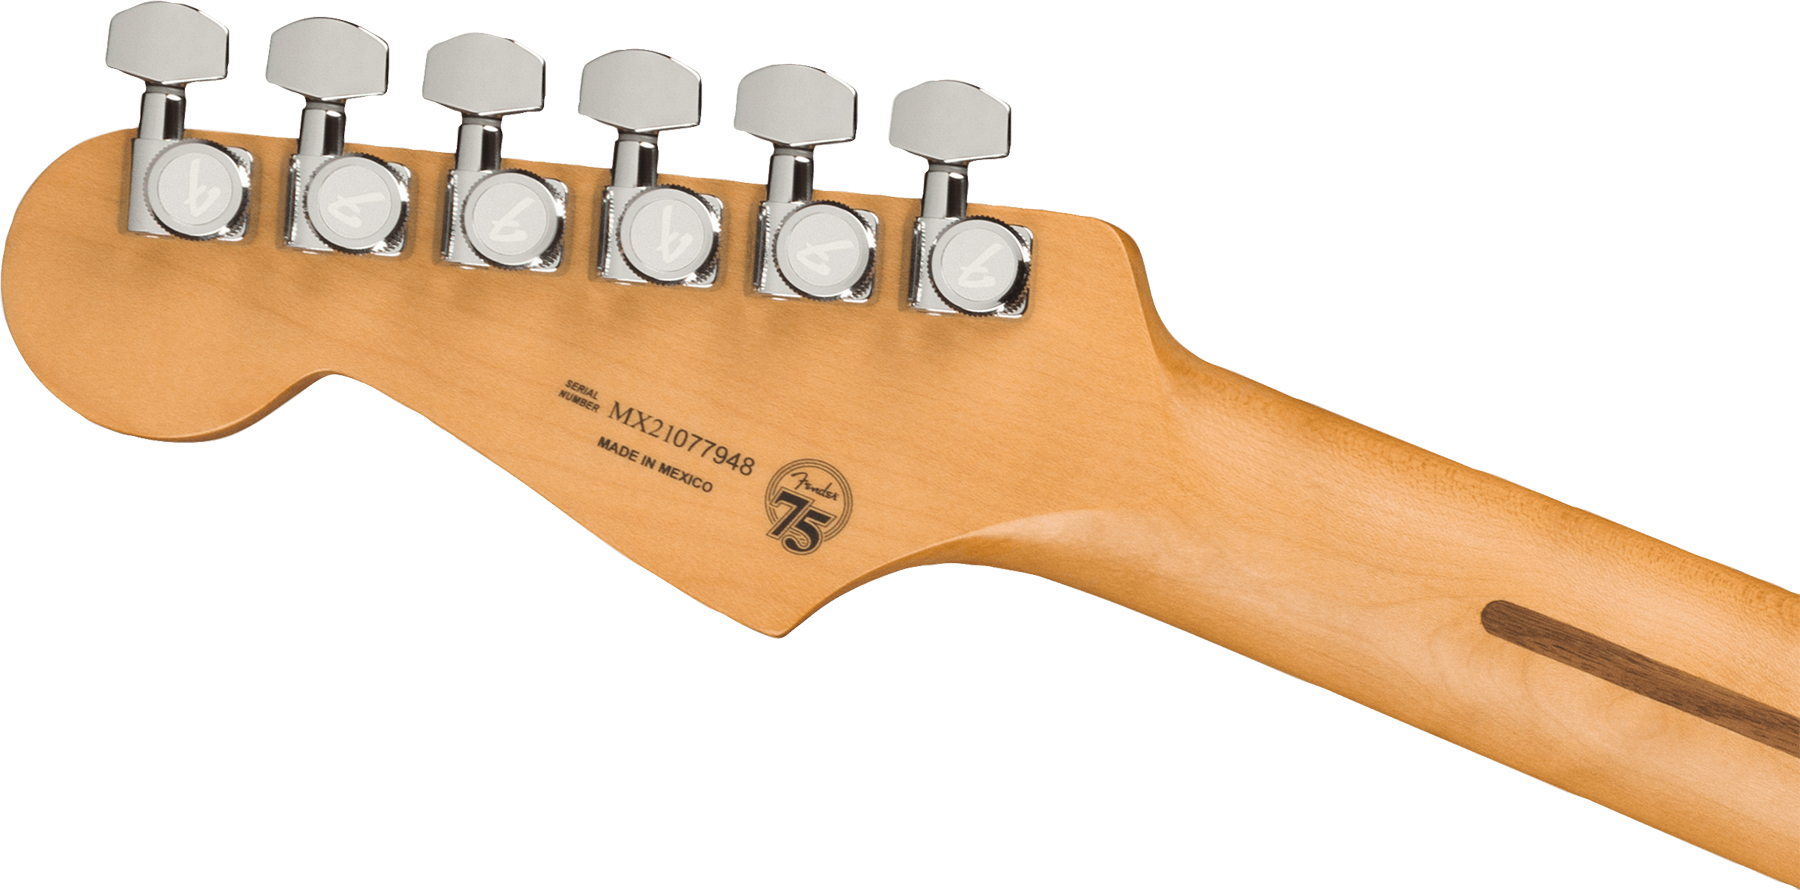 Fender Strat Player Plus Mex 3s Trem Pf - Aged Candy Apple Red - Str shape electric guitar - Variation 3